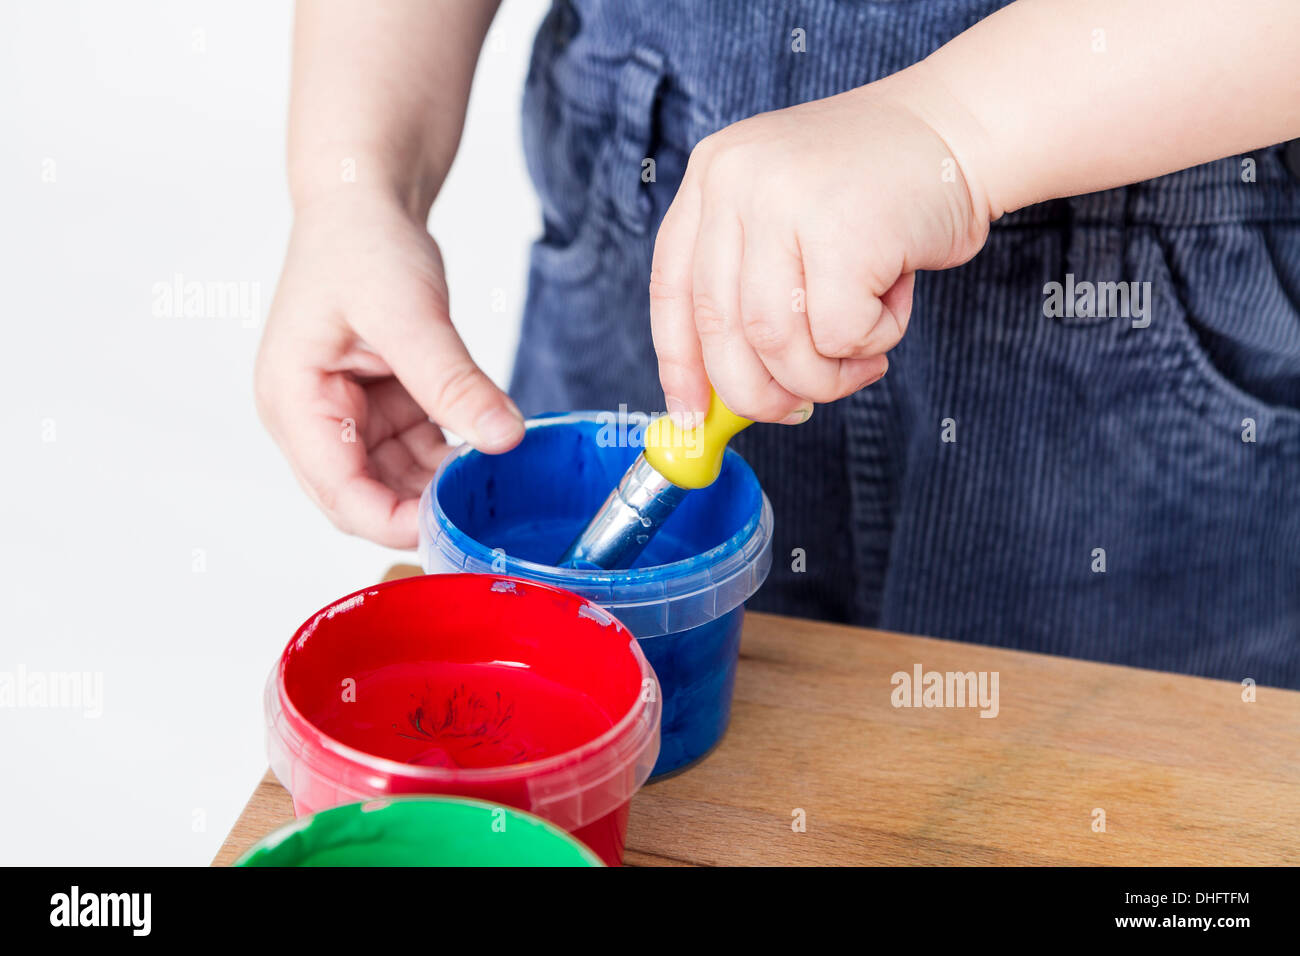 Kind hält Pinsel in blauer Farbe Wanne Stockfotografie - Alamy